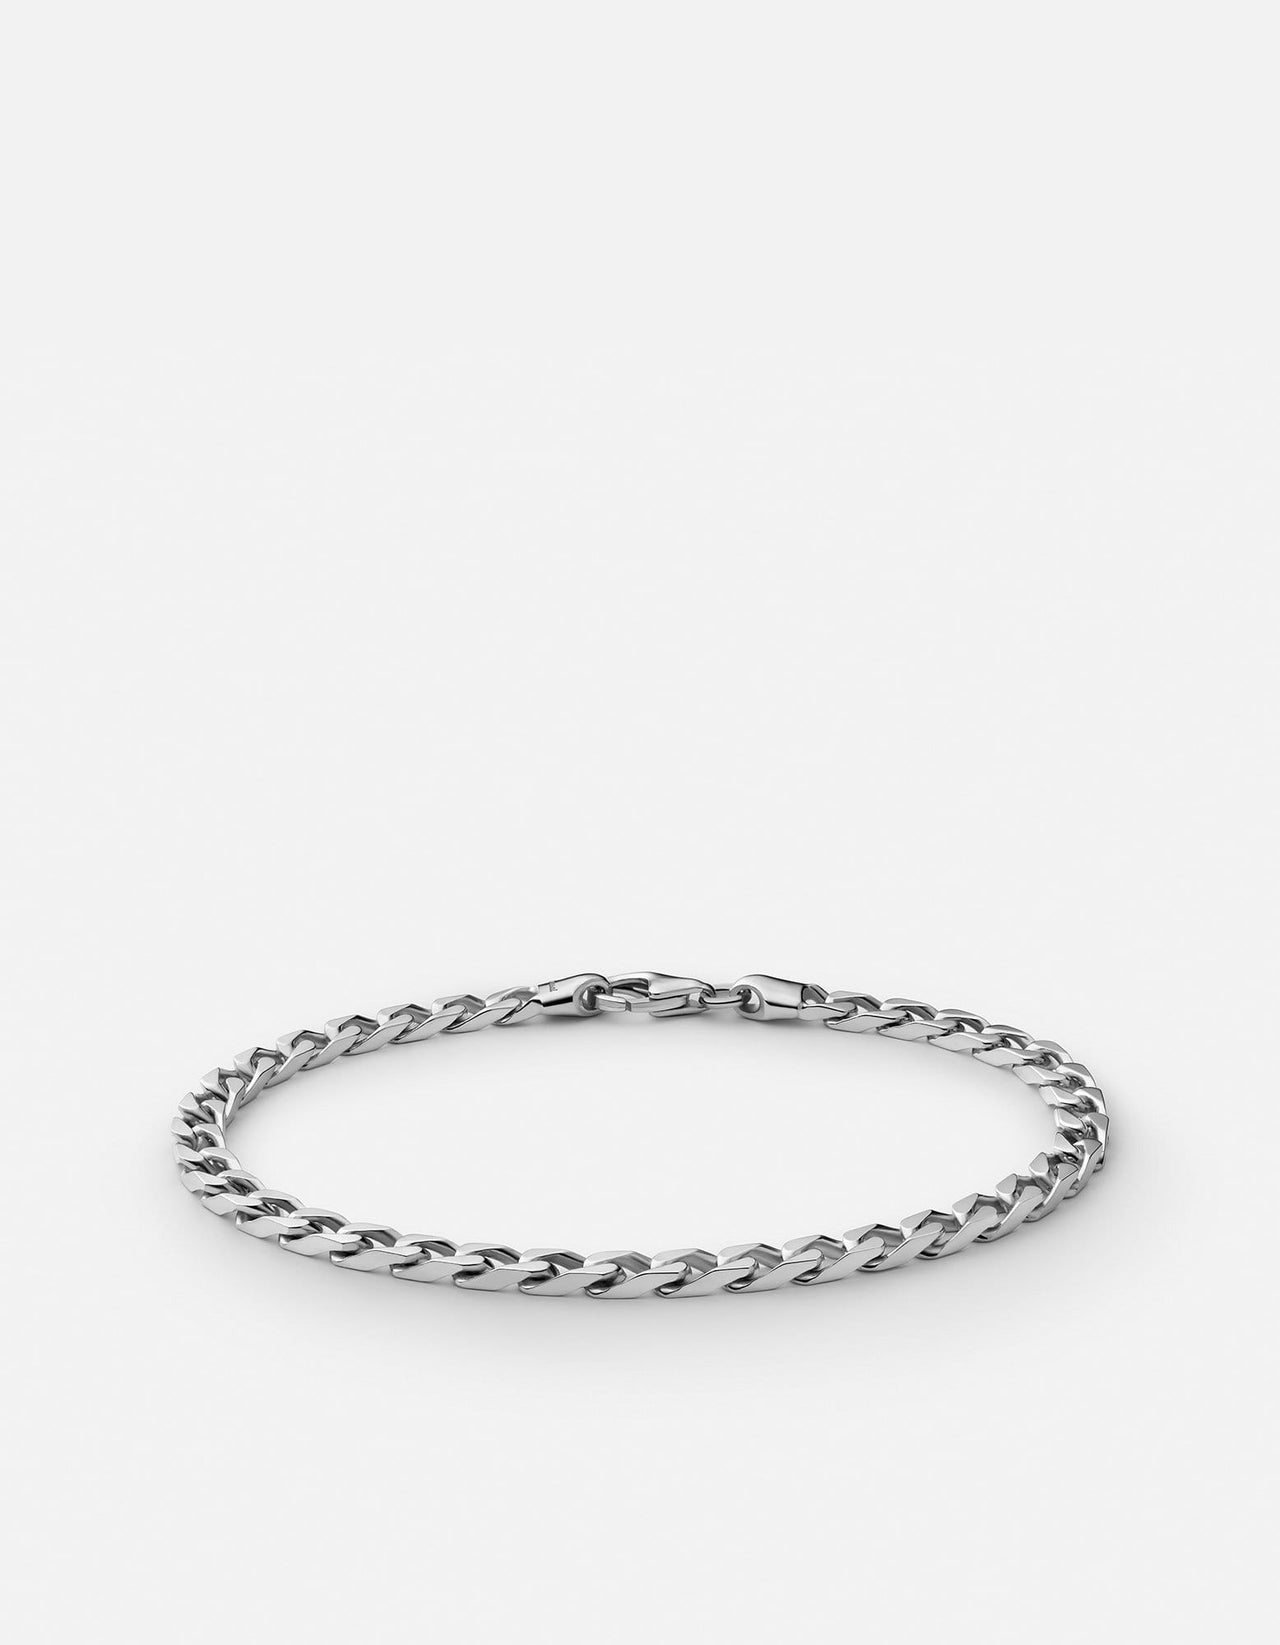 Miansai Men's 4mm Cuban Chain Bracelet, Sterling Silver, Size S